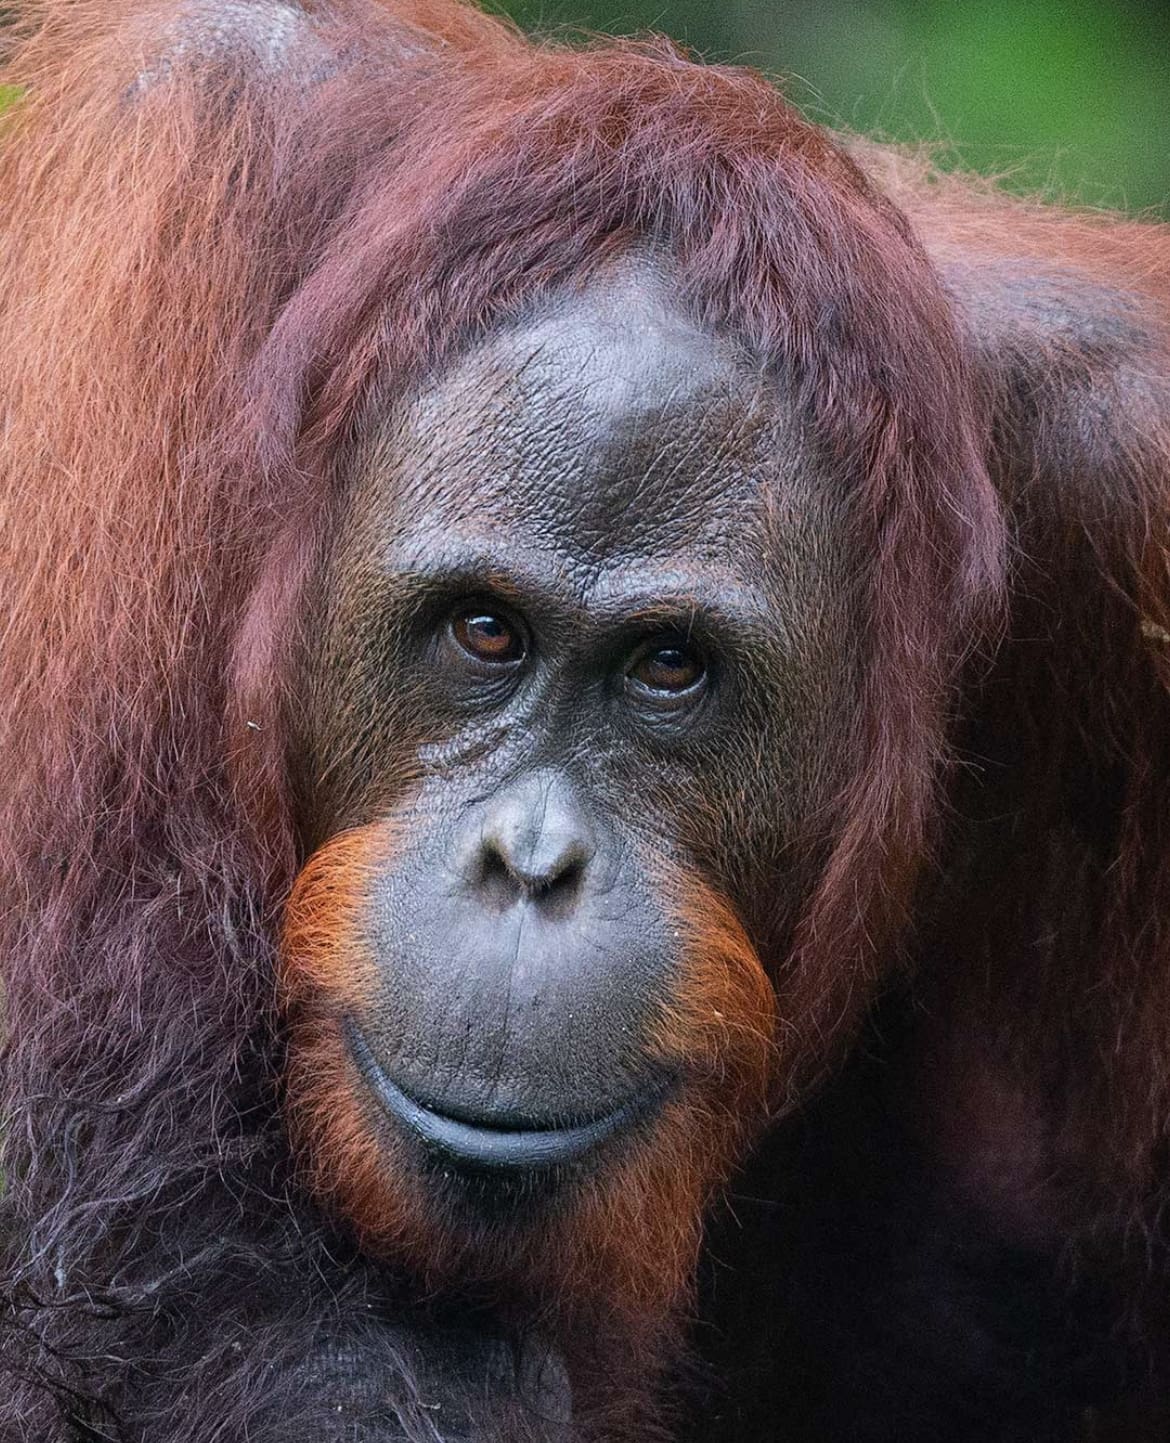 Flangeless male orangutan in Borneo